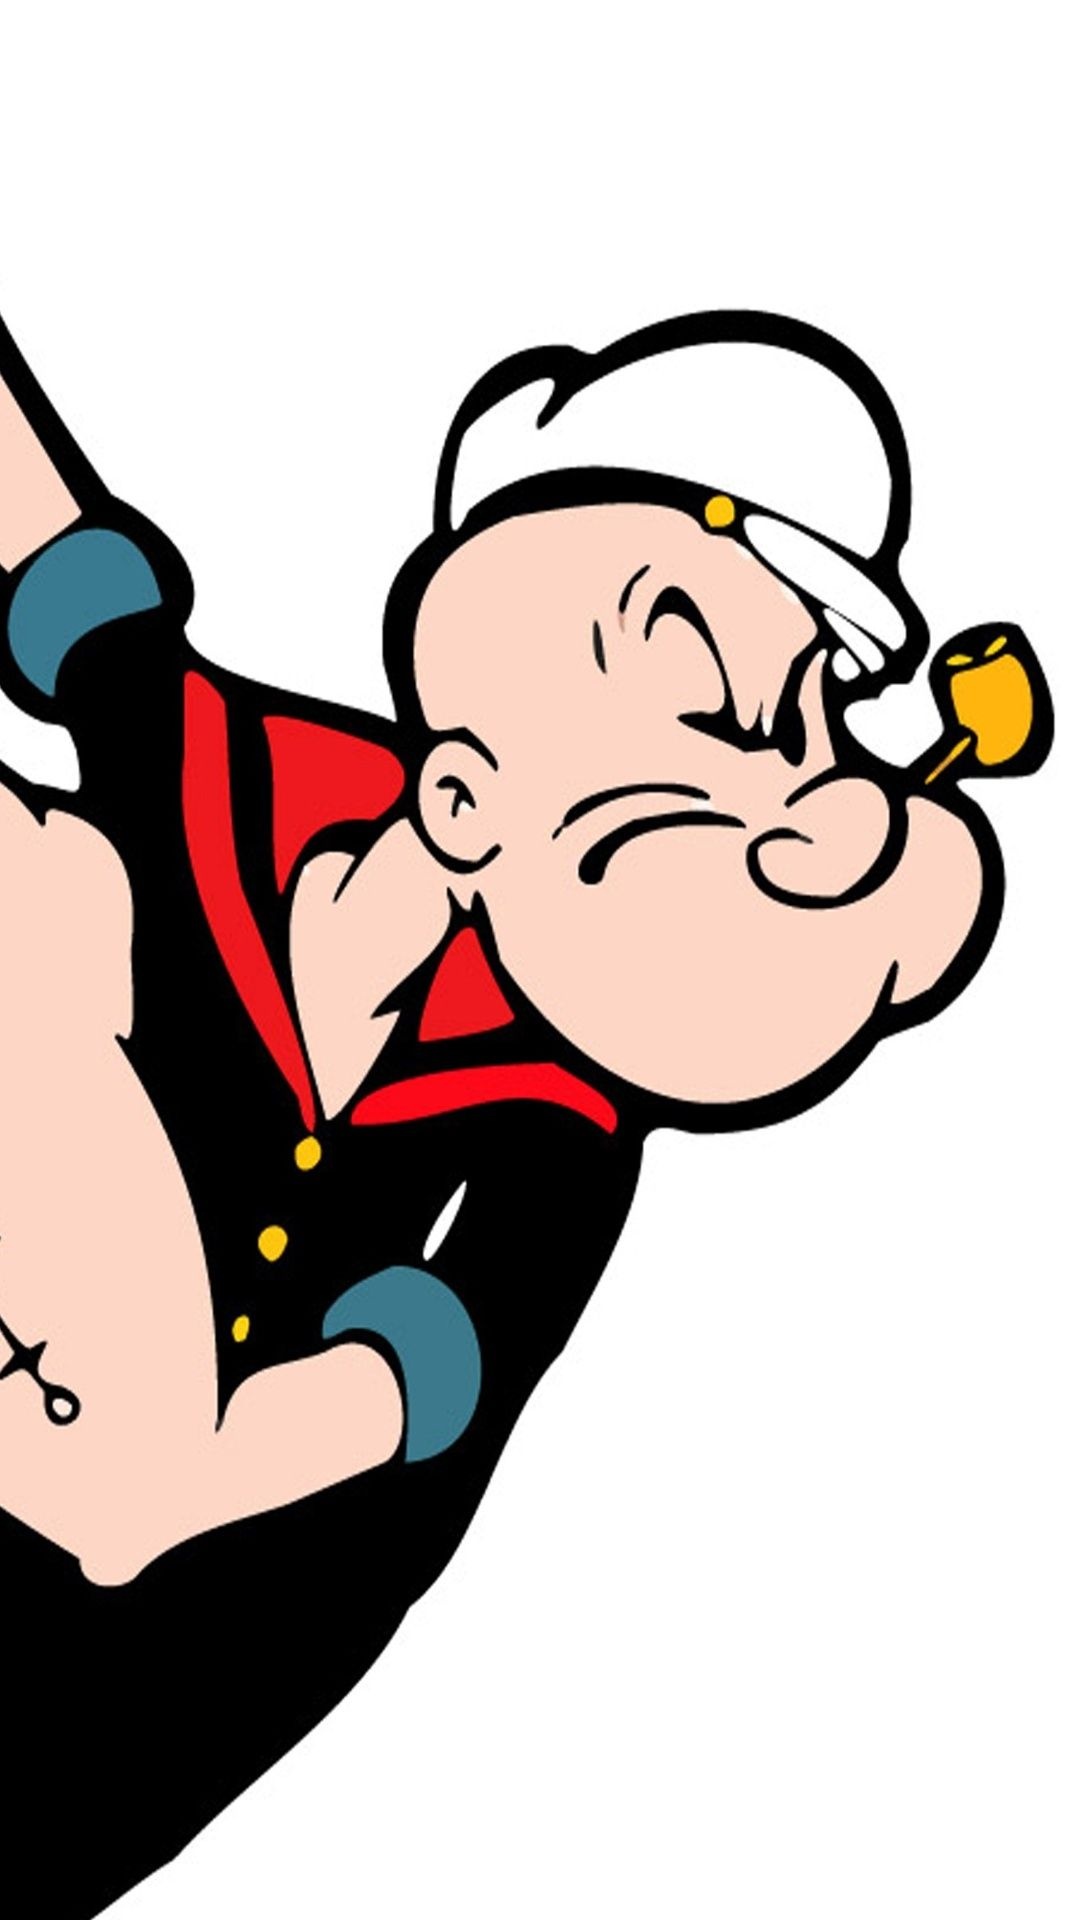 Popeye the Sailor Animation, Popeye, Cute cartoon wallpapers, Fondos de dibujos animados, 1080x1920 Full HD Handy